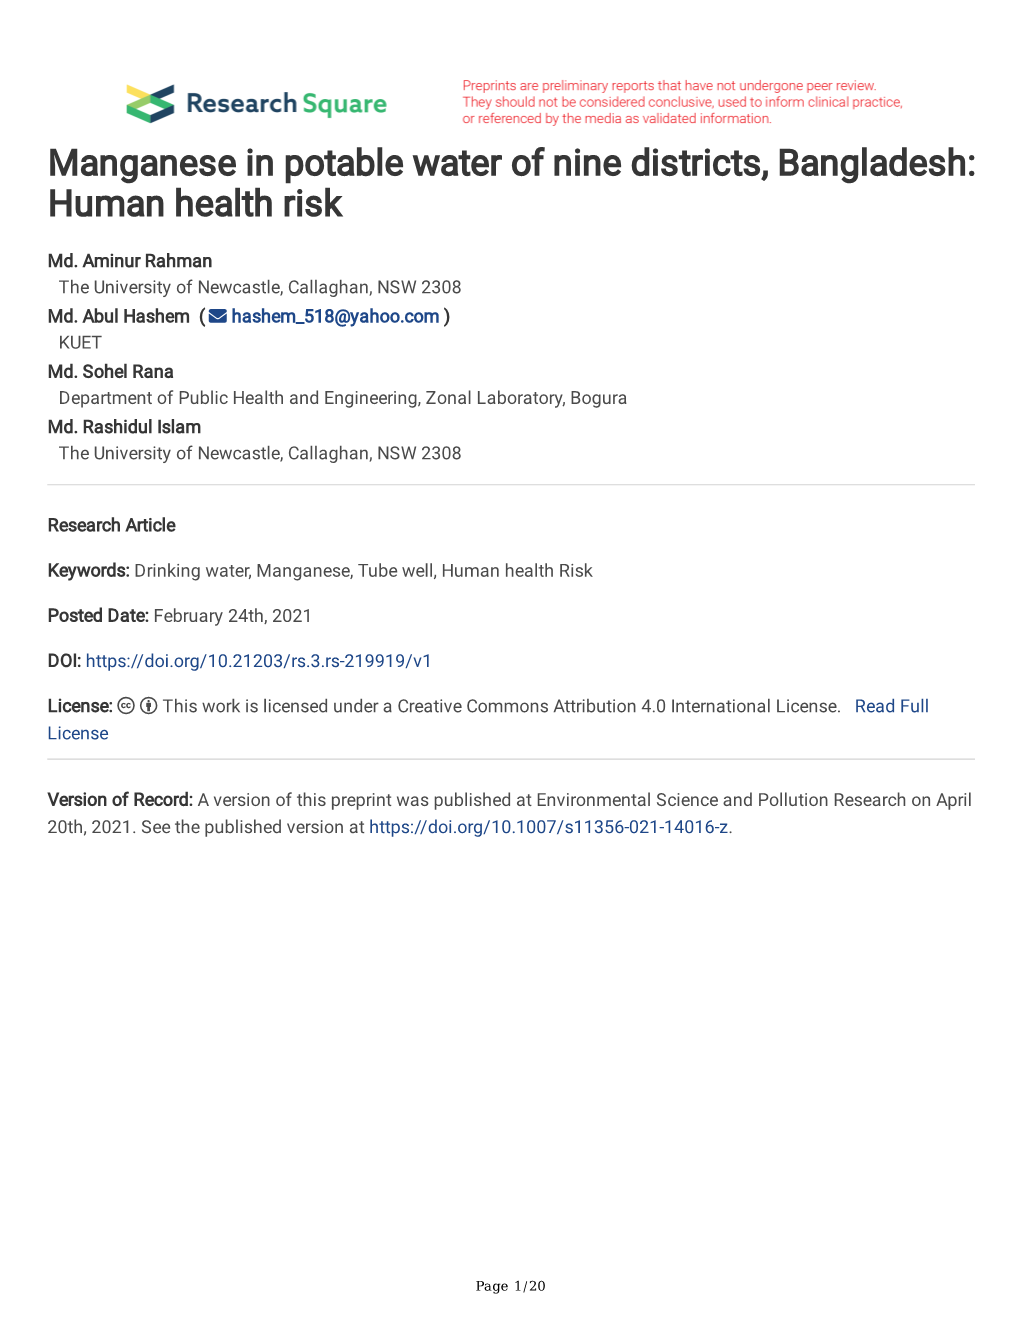 Manganese in Potable Water of Nine Districts, Bangladesh: Human Health Risk